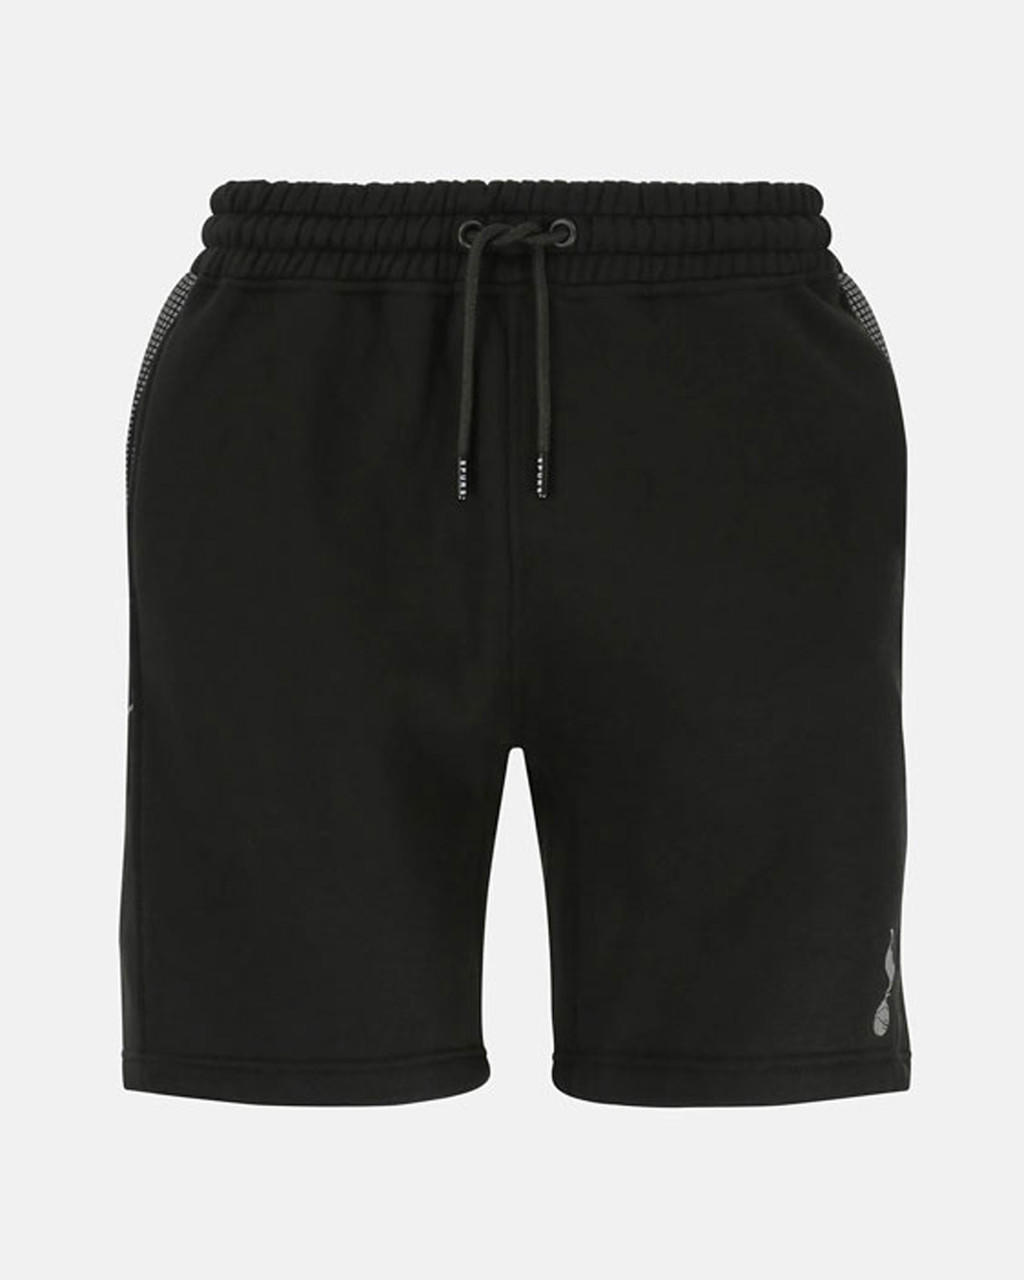 Spurs Mens Black Reflective Print Shorts | Official Spurs Store